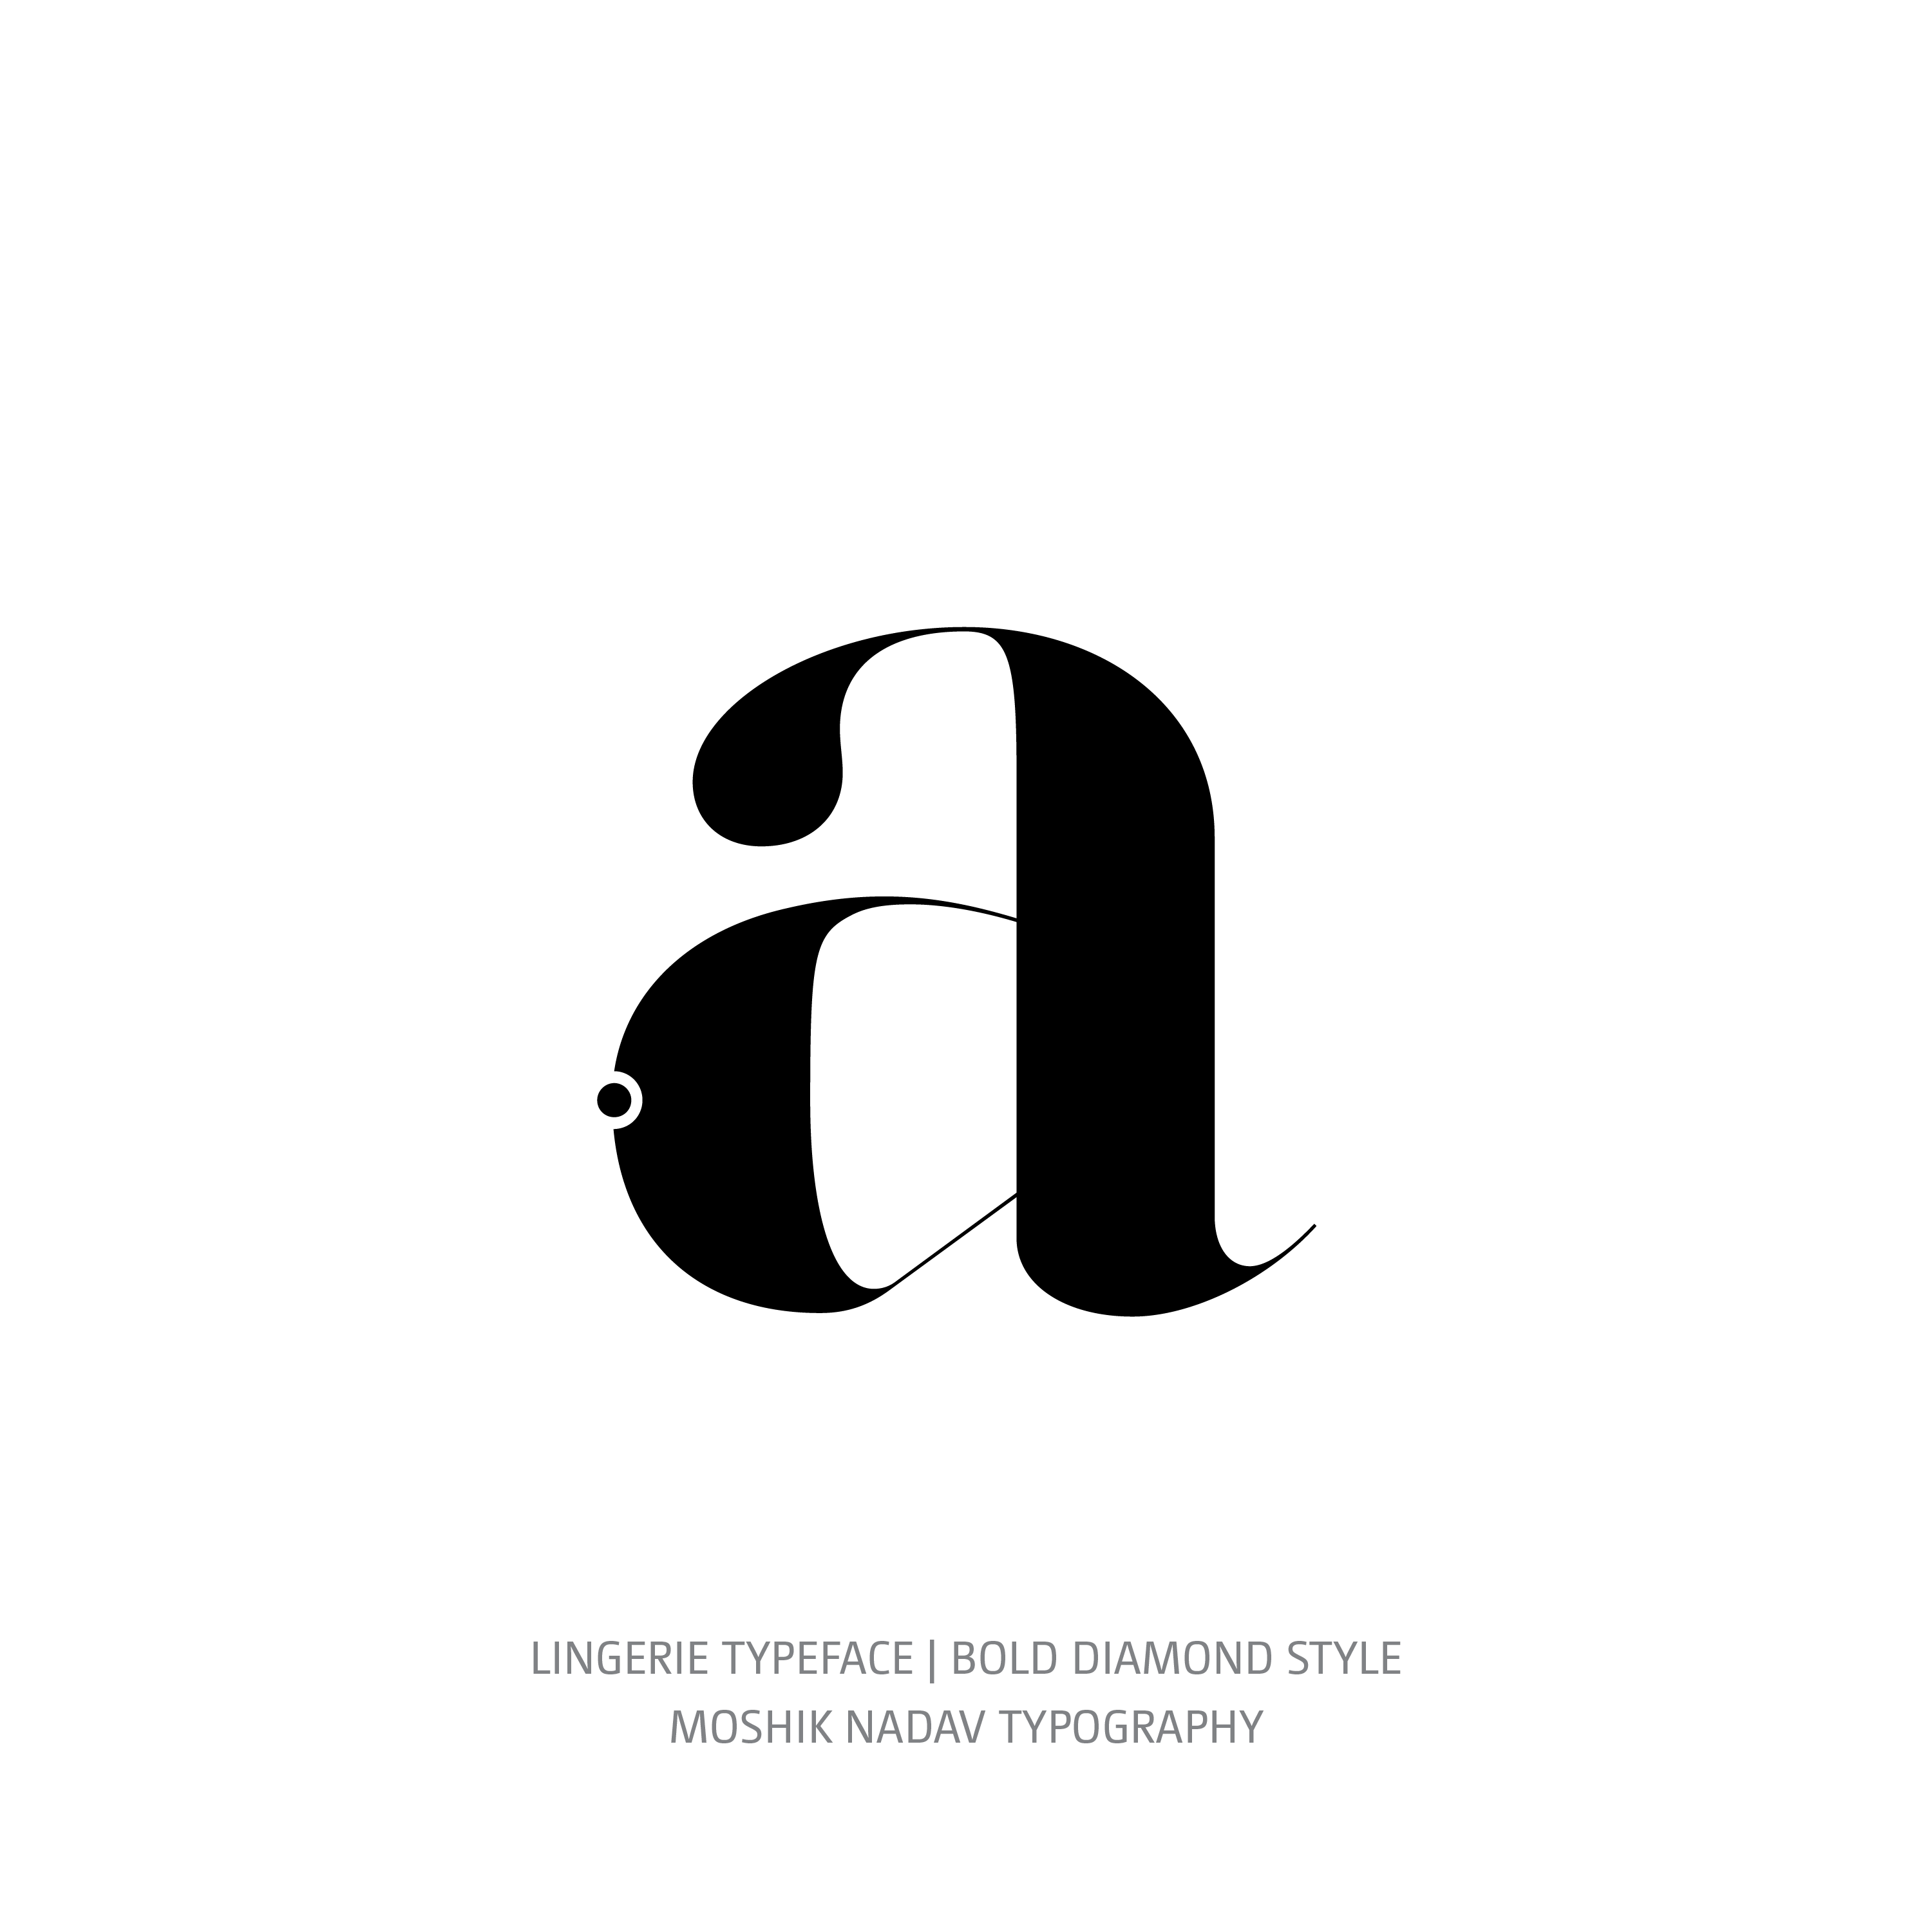 Lingerie Typeface Bold Diamond a